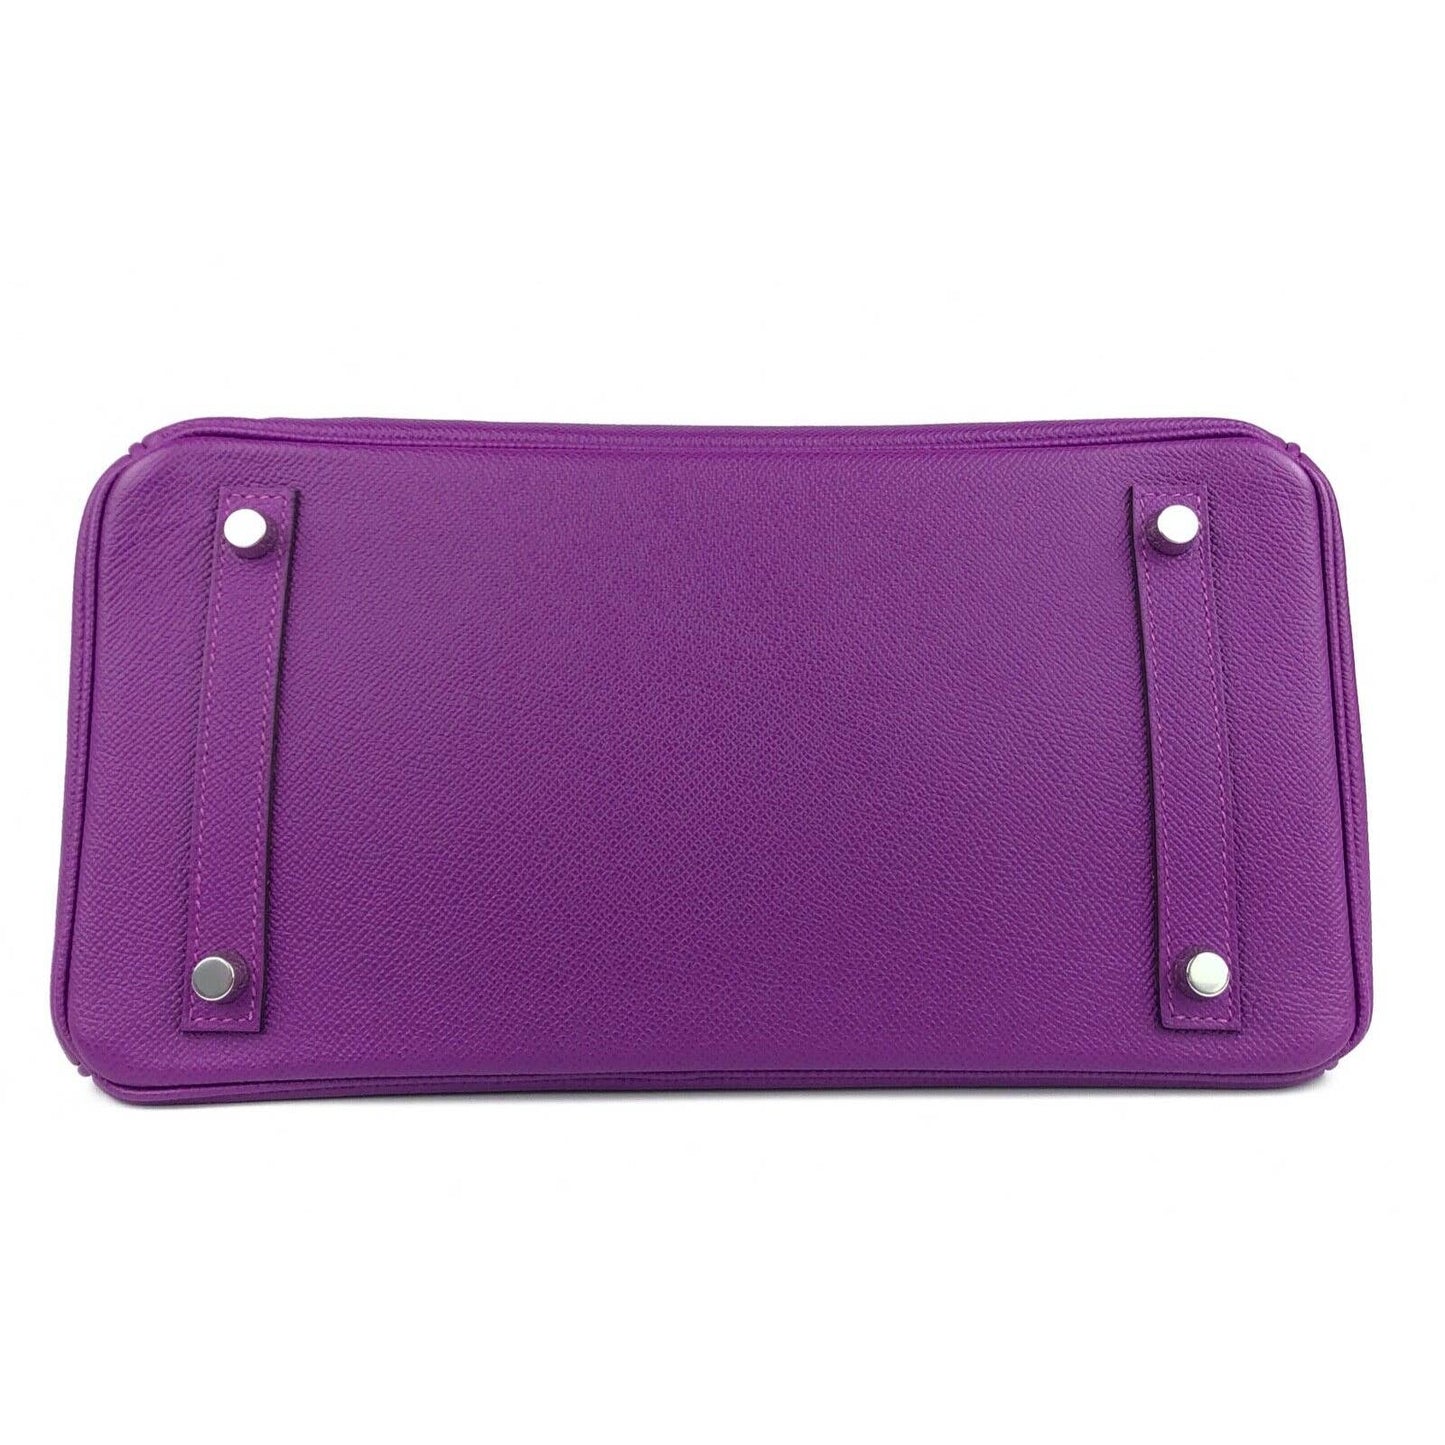 Hermes Birkin 30 Anemone Purple Leather Handbag Palladium Hardware 2020